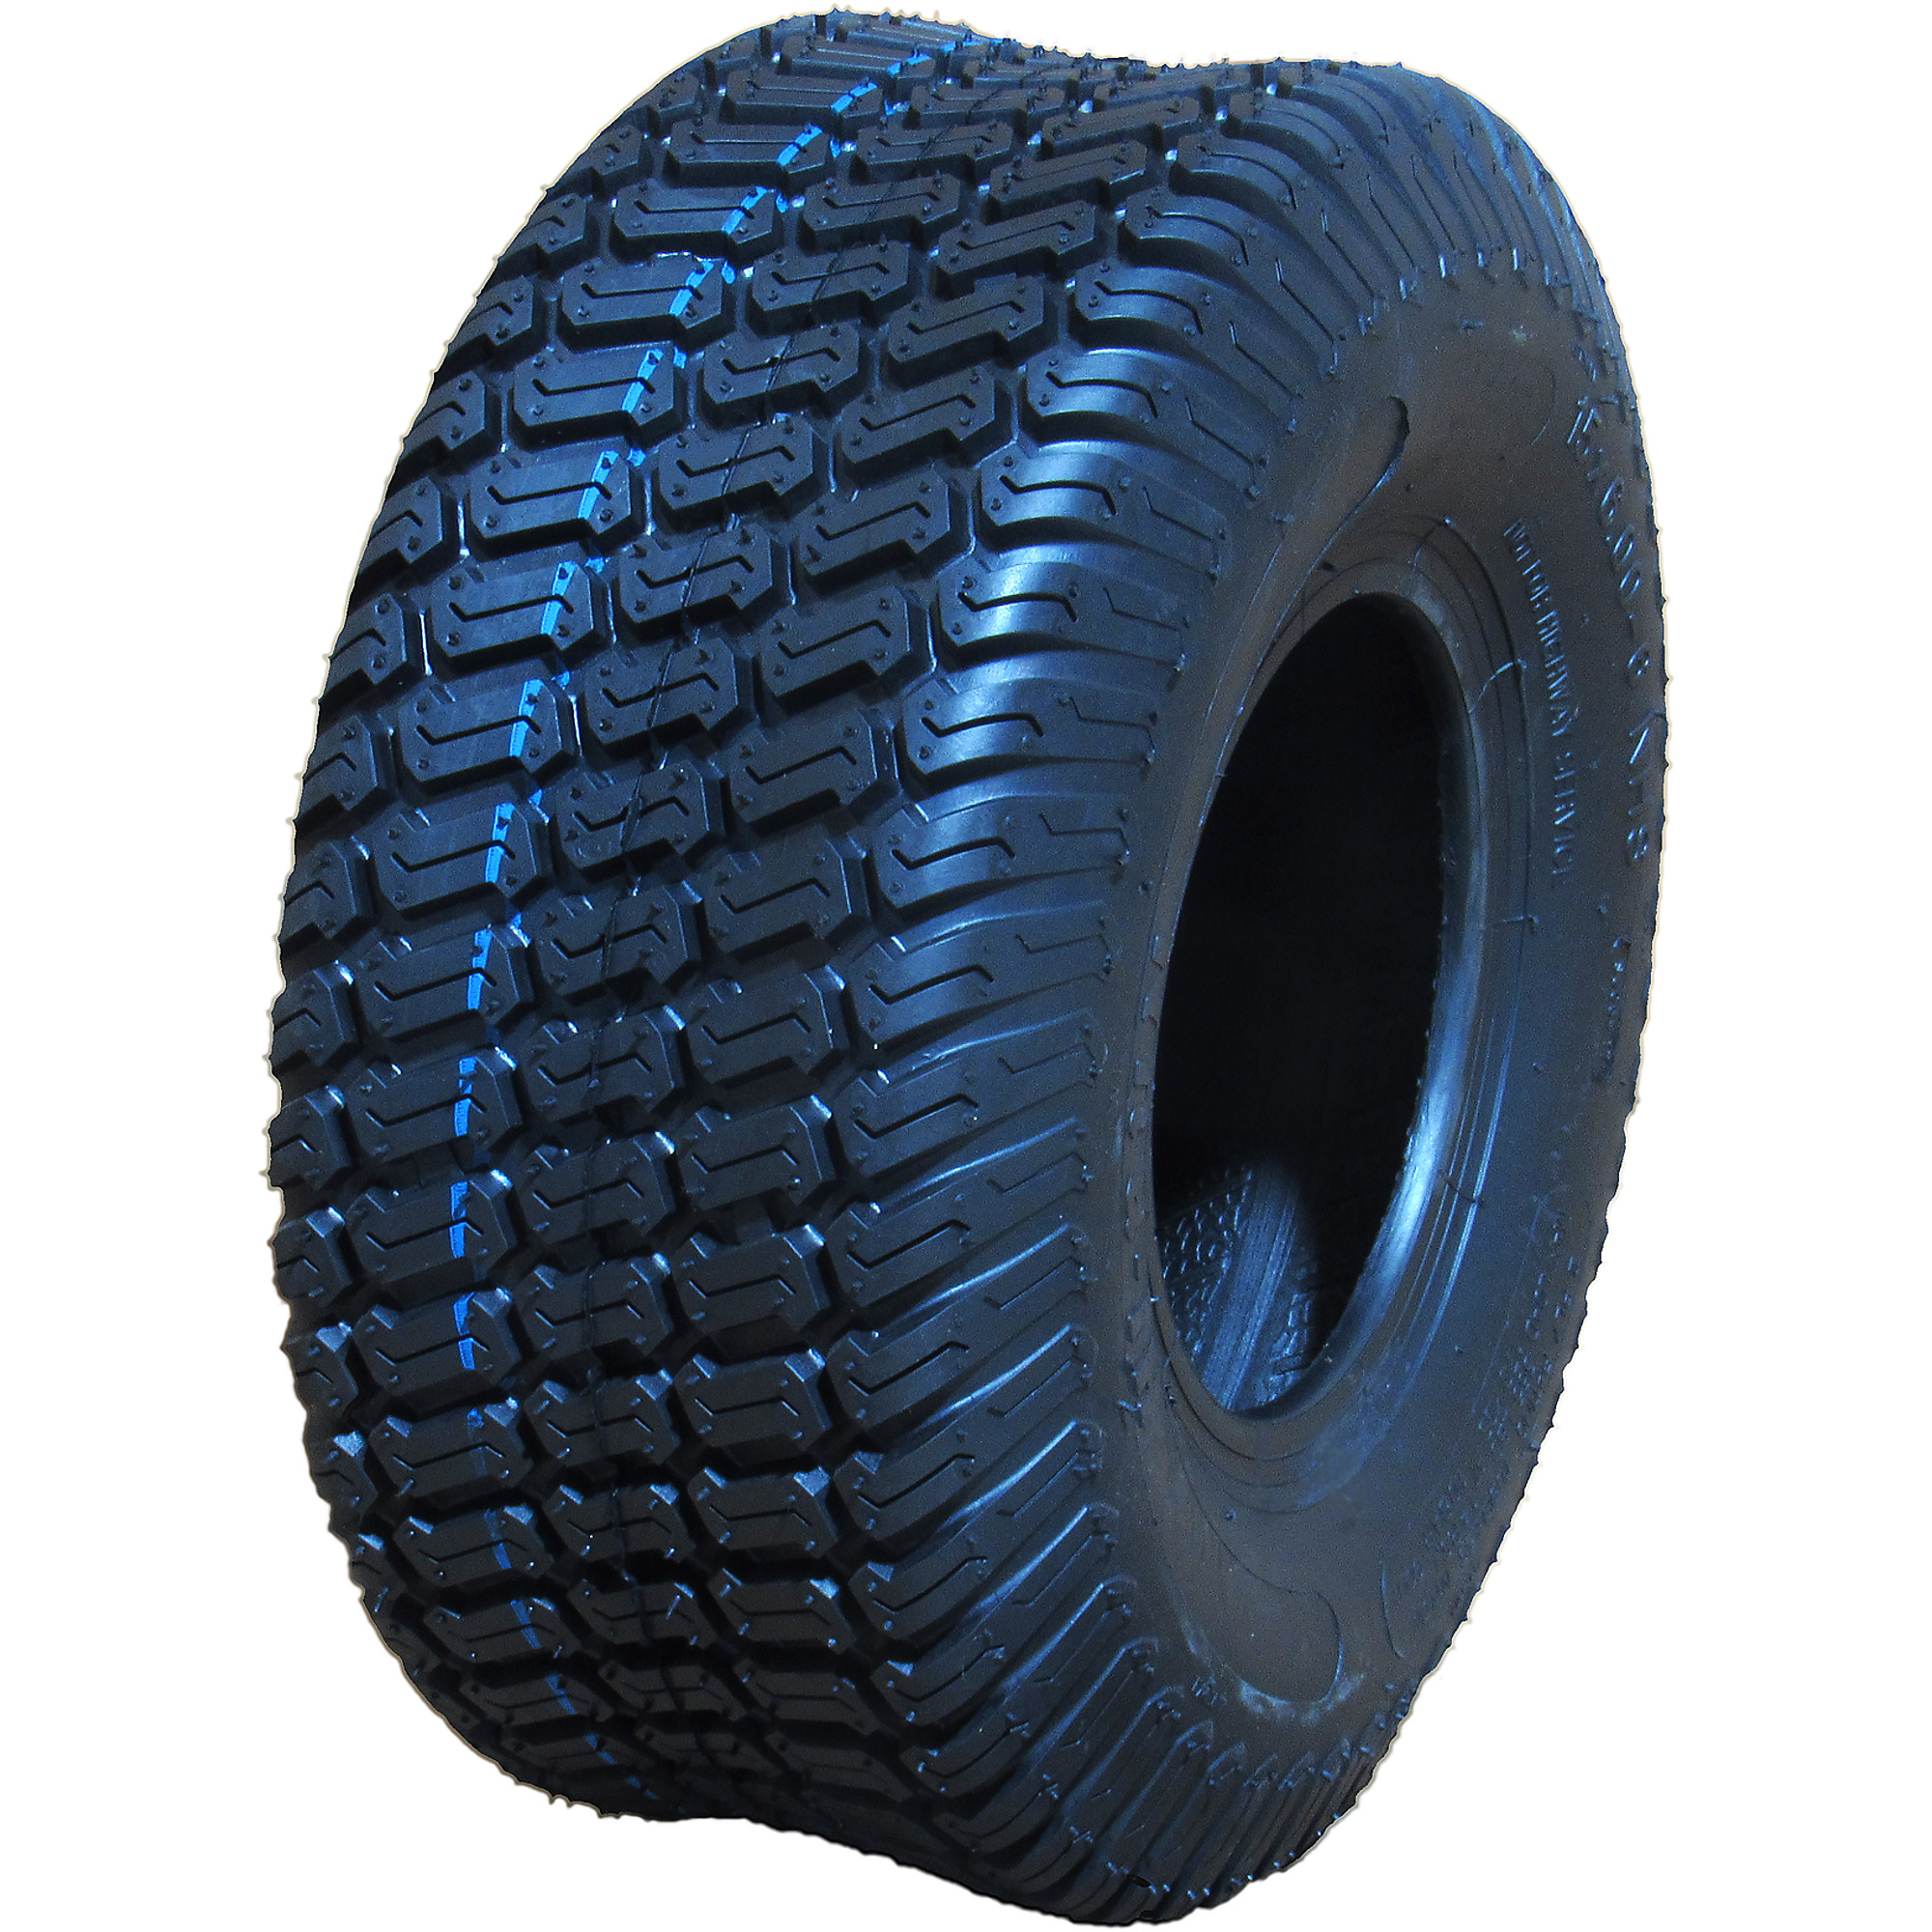 Lawn Garden Tire, SU05 Turf, Tire Size 4.80/4.00-8, Load Range Rating A, Model - HI-RUN WD1083